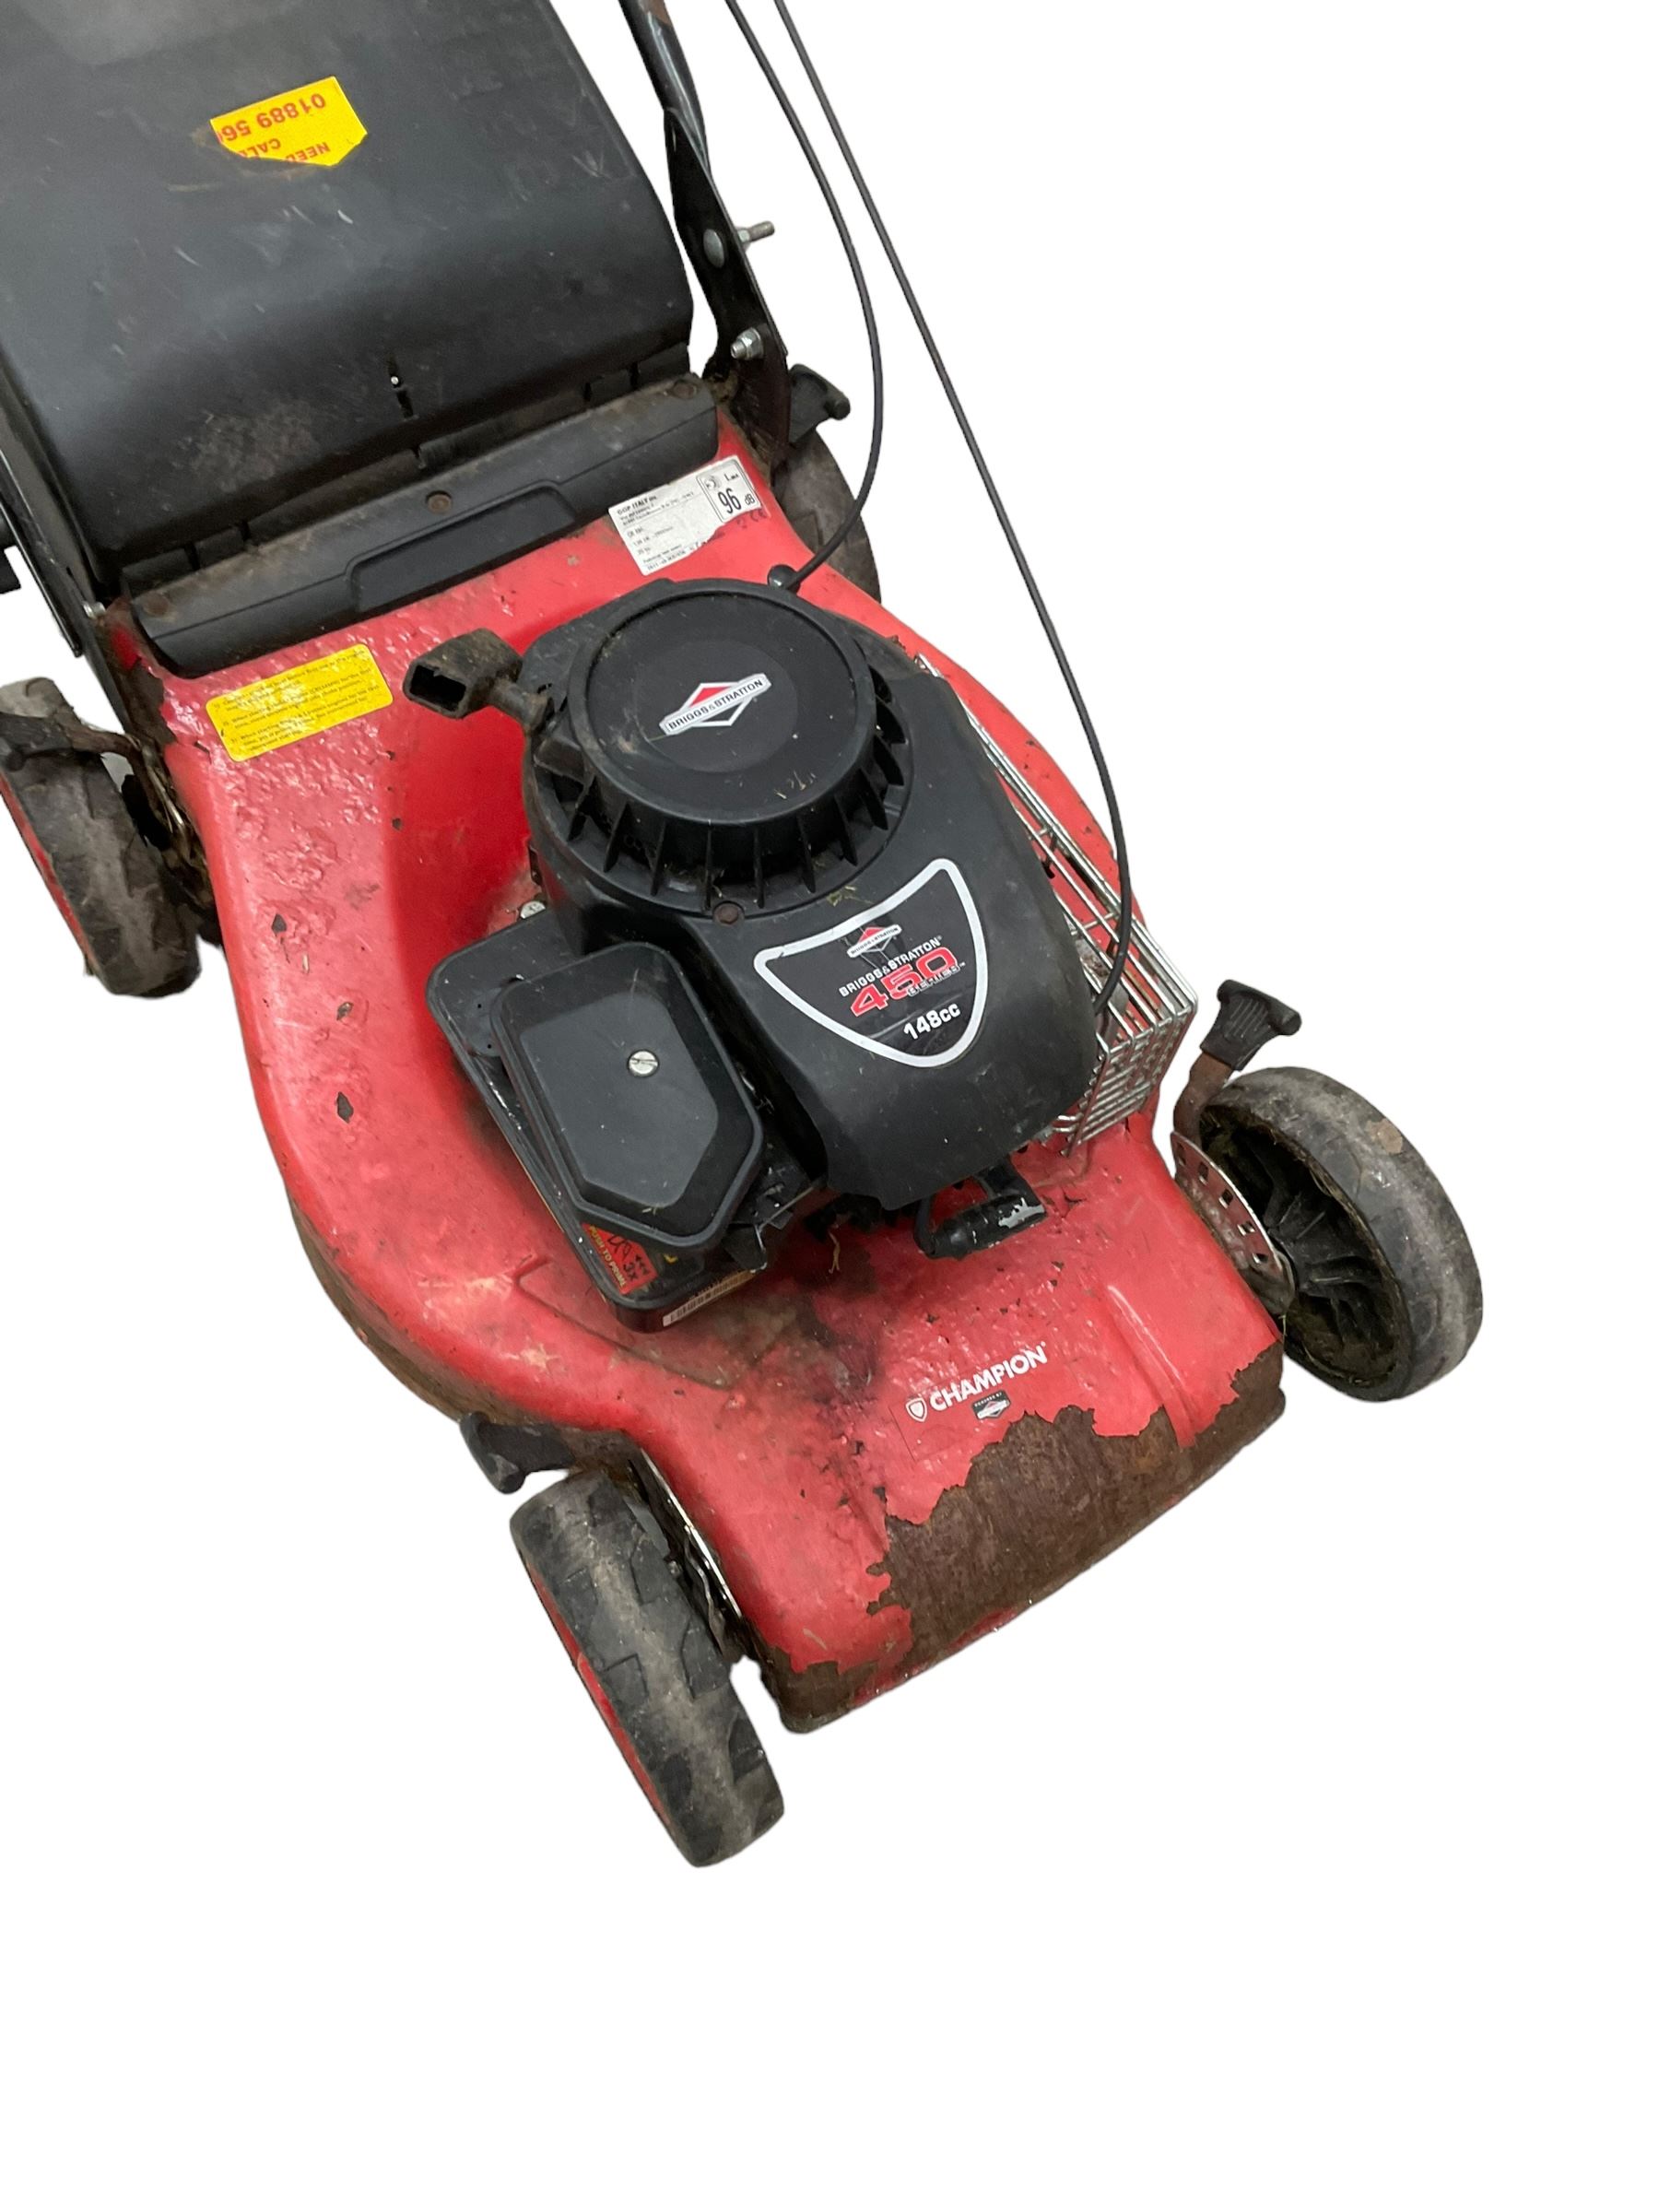 Briggs and Stratton 450 series petrol lawnmower and bulldog rake - Image 2 of 3